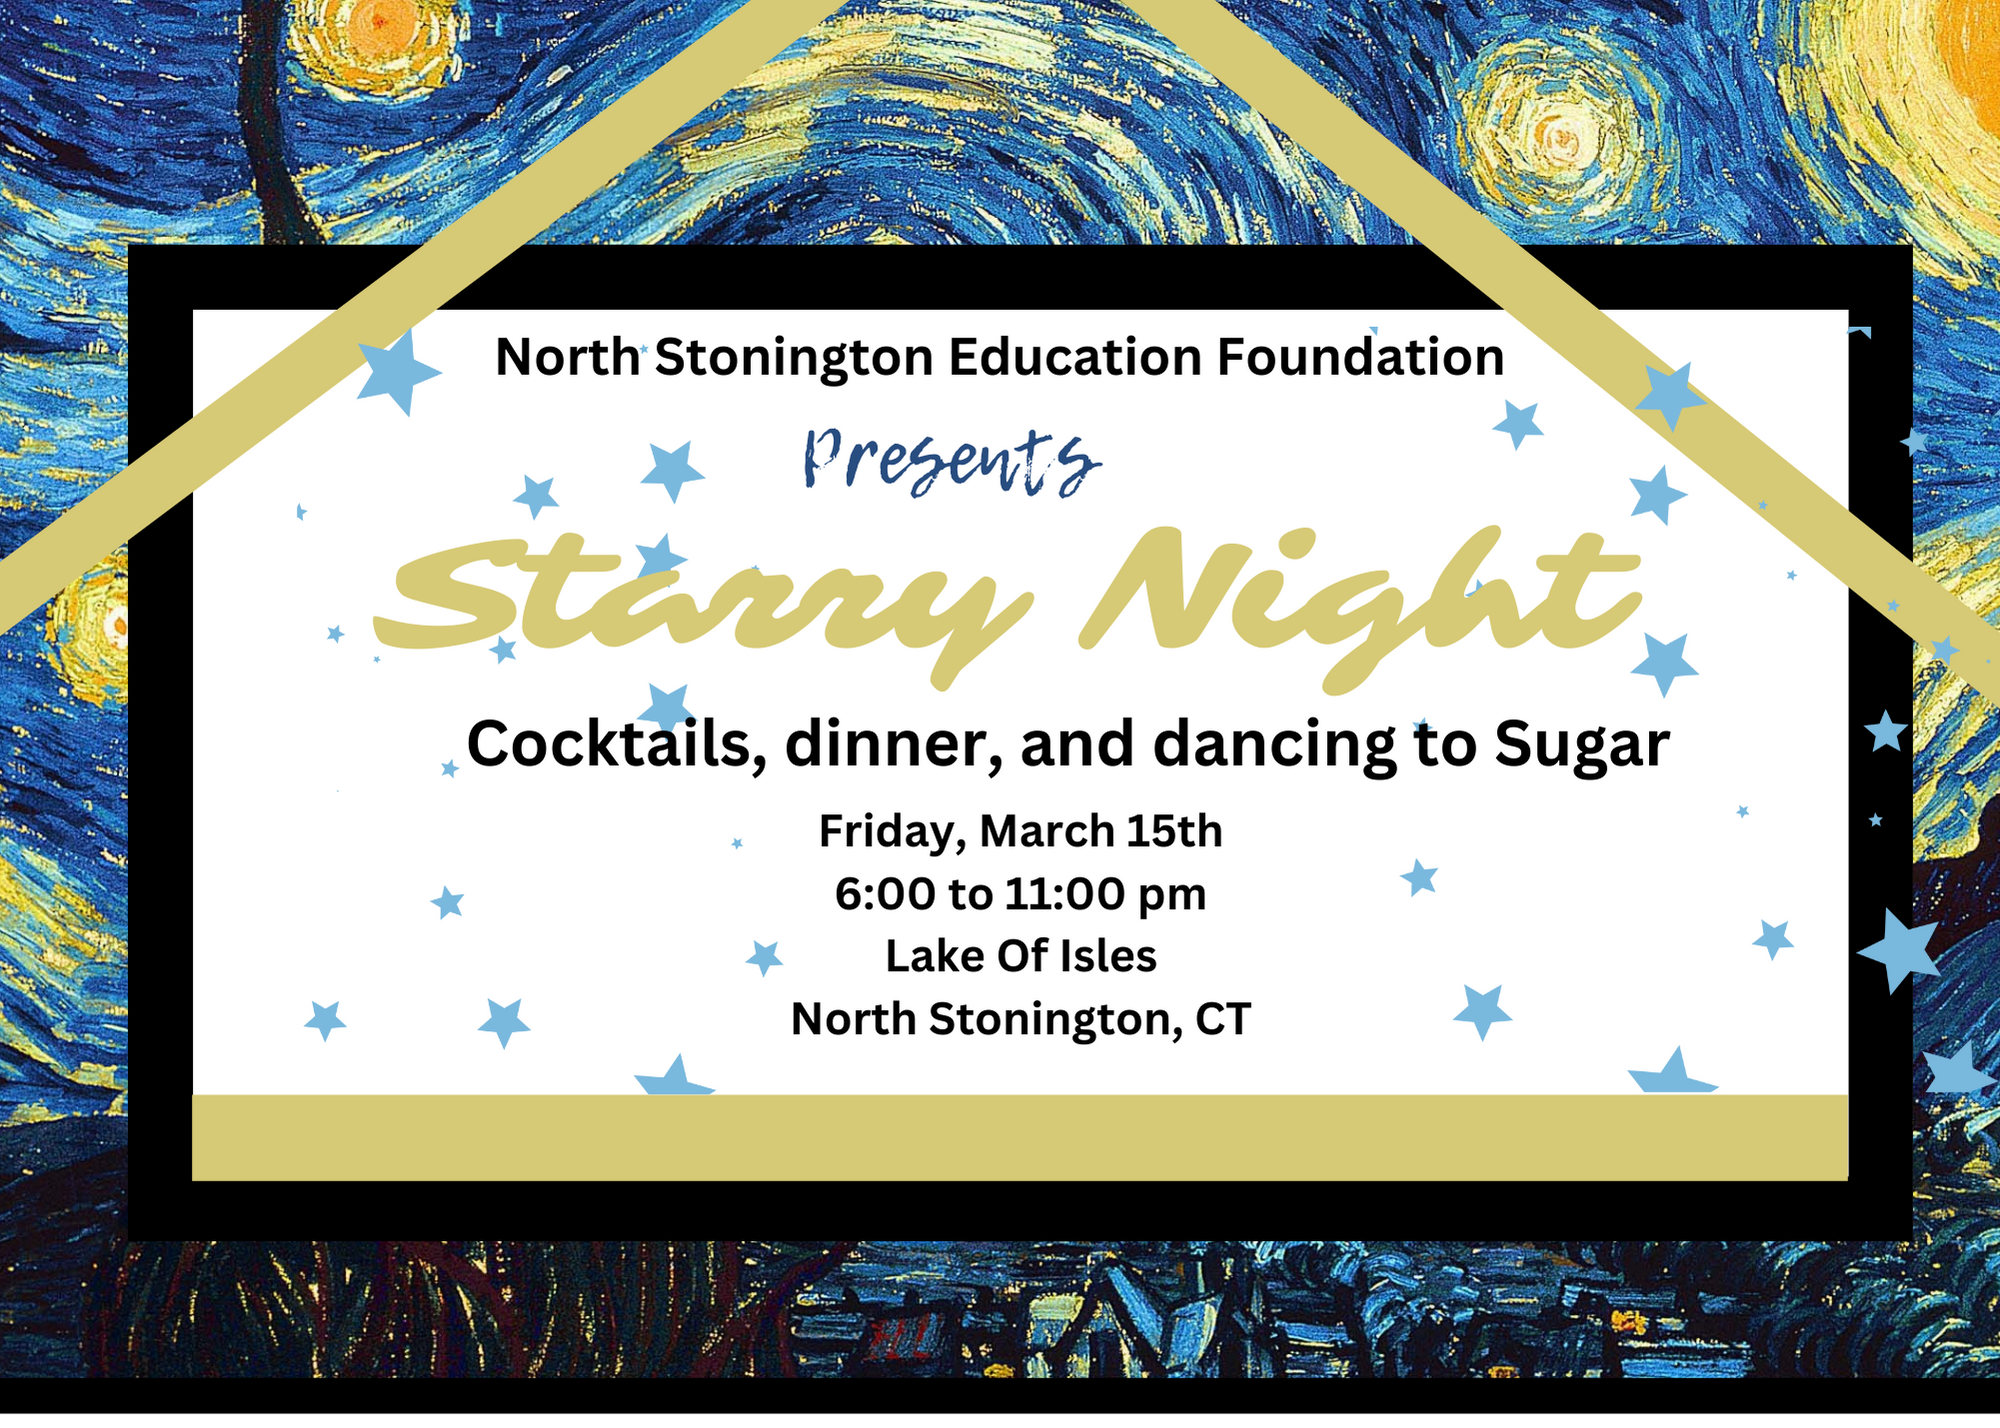 North Stonington Education Foundation's Annual Gala Event